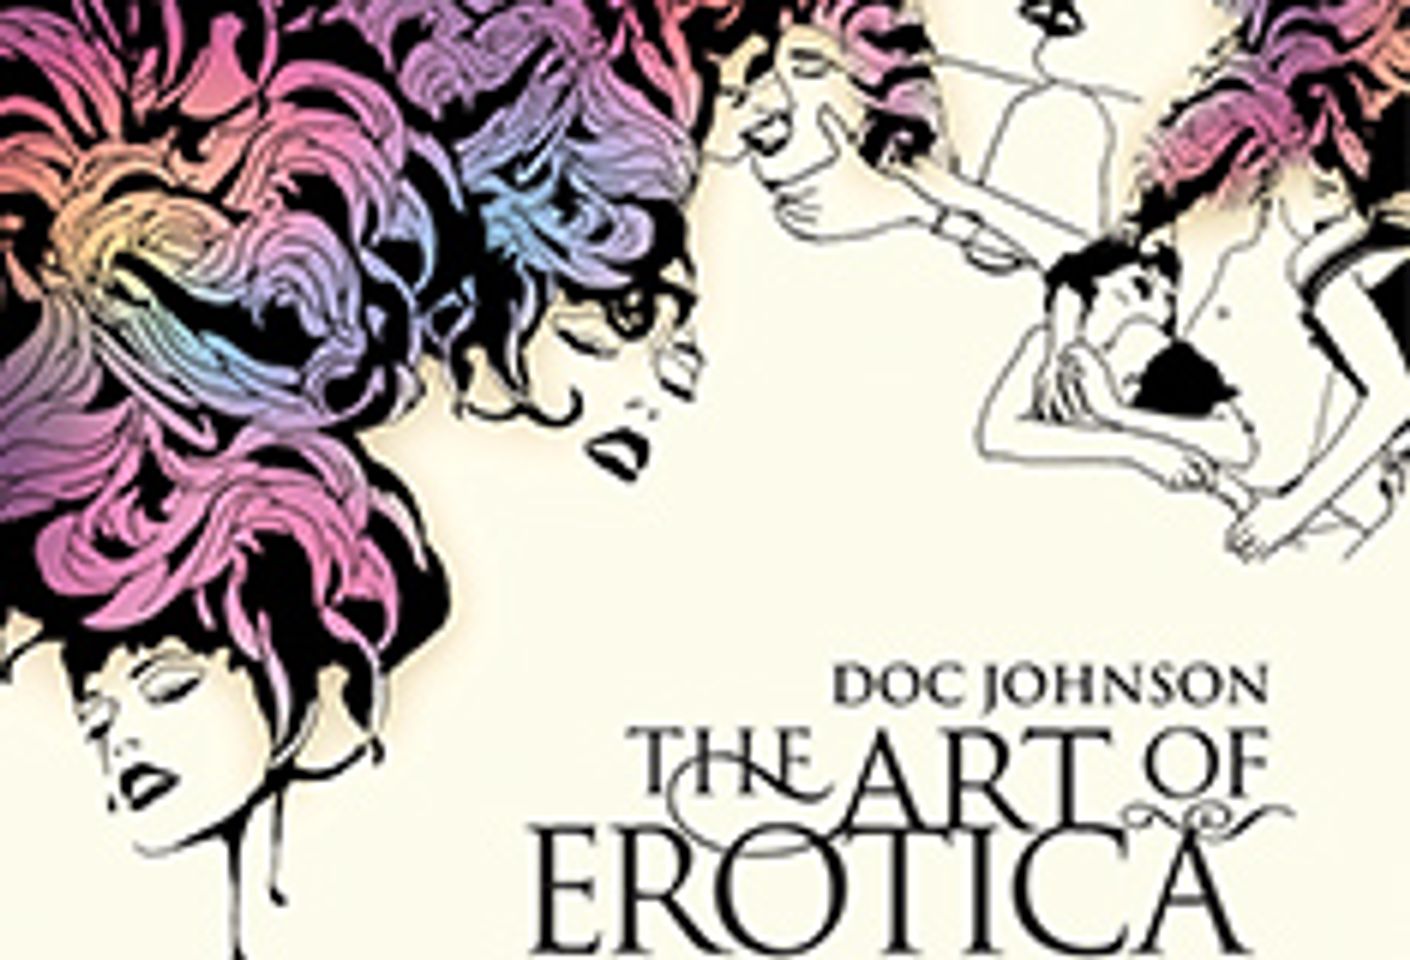 Doc Johnson Releases The Art of Erotica 2007 Catalog